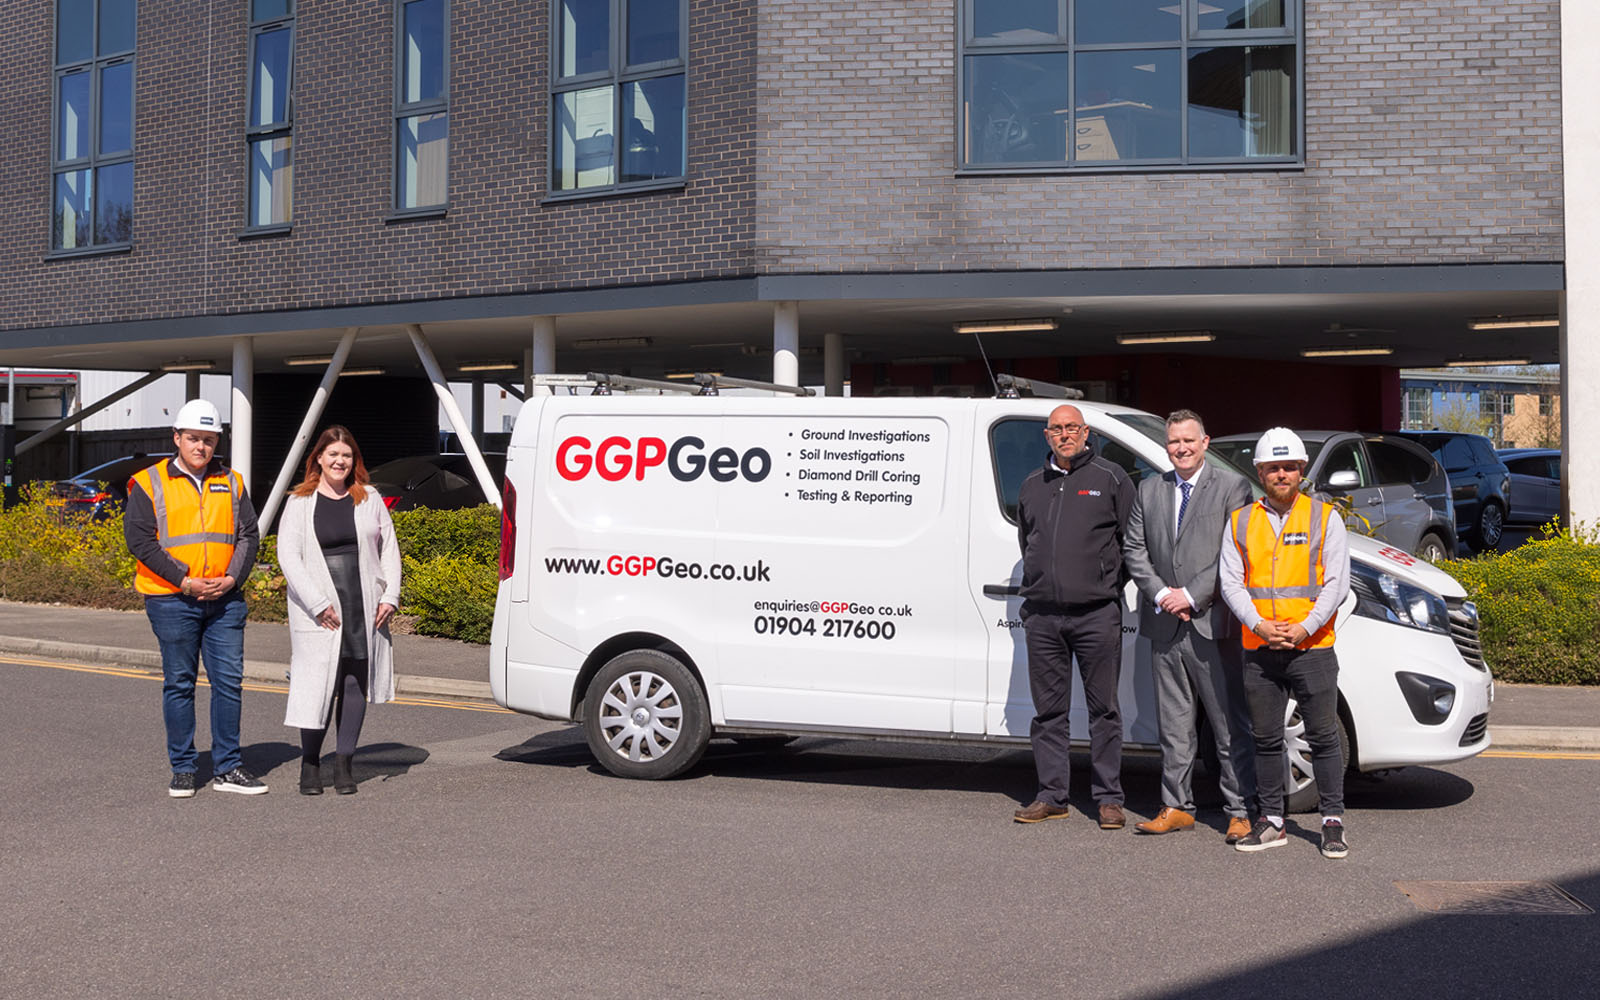 Five workers stood in front of a GGPGeo van.